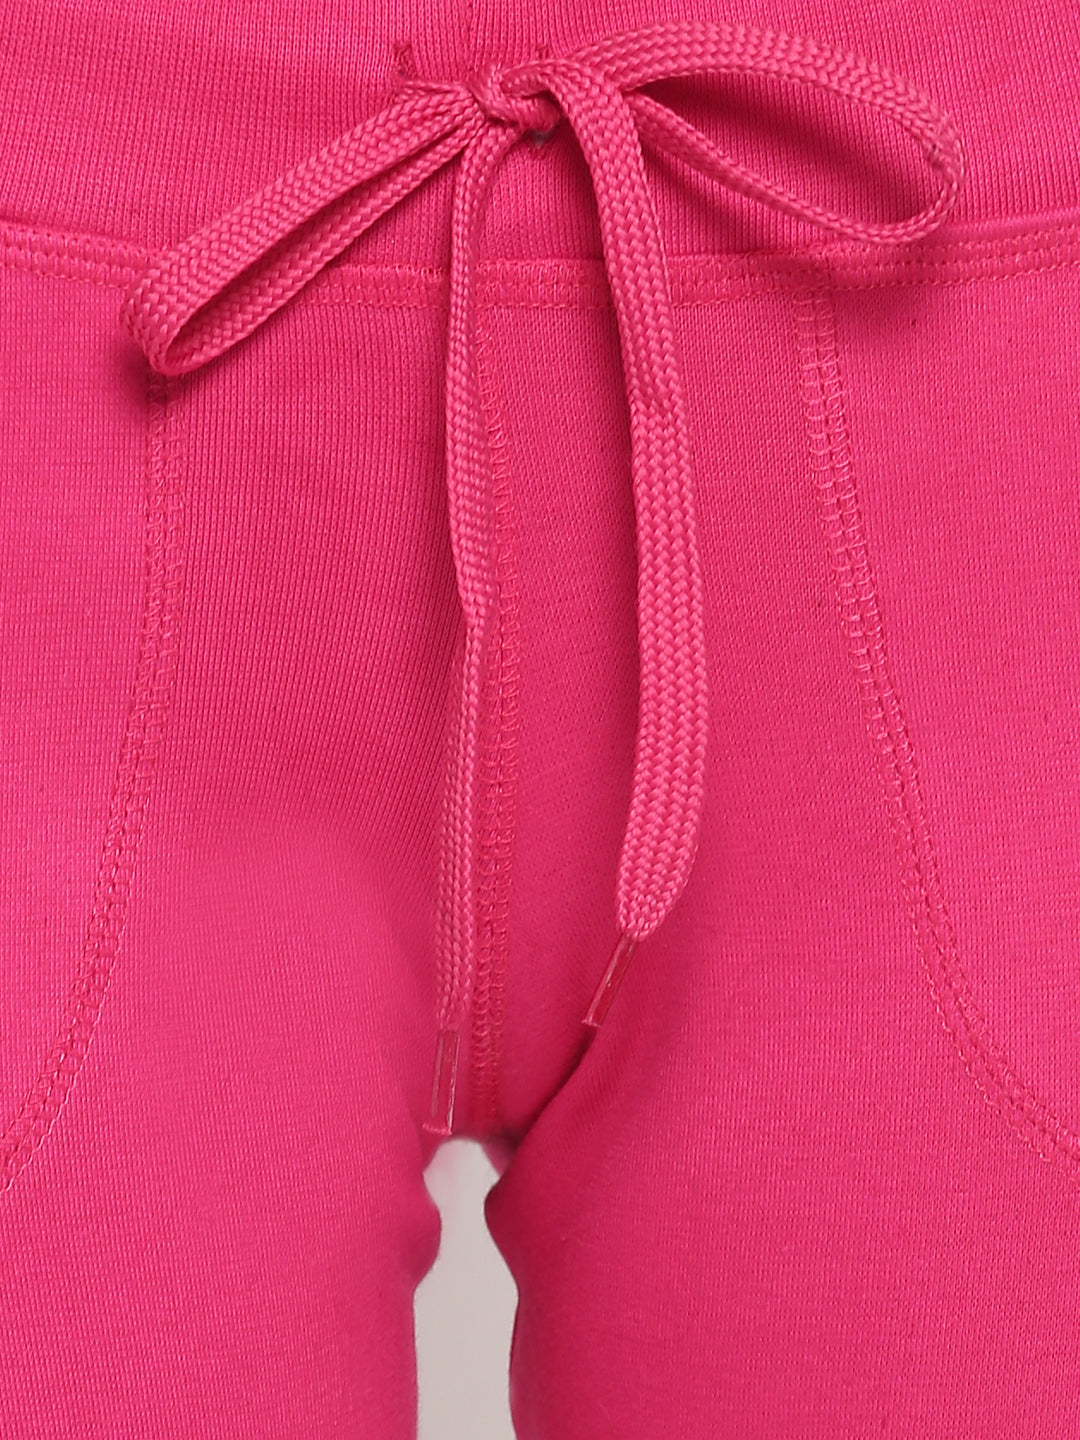 Women's Pink Cotton Shorts